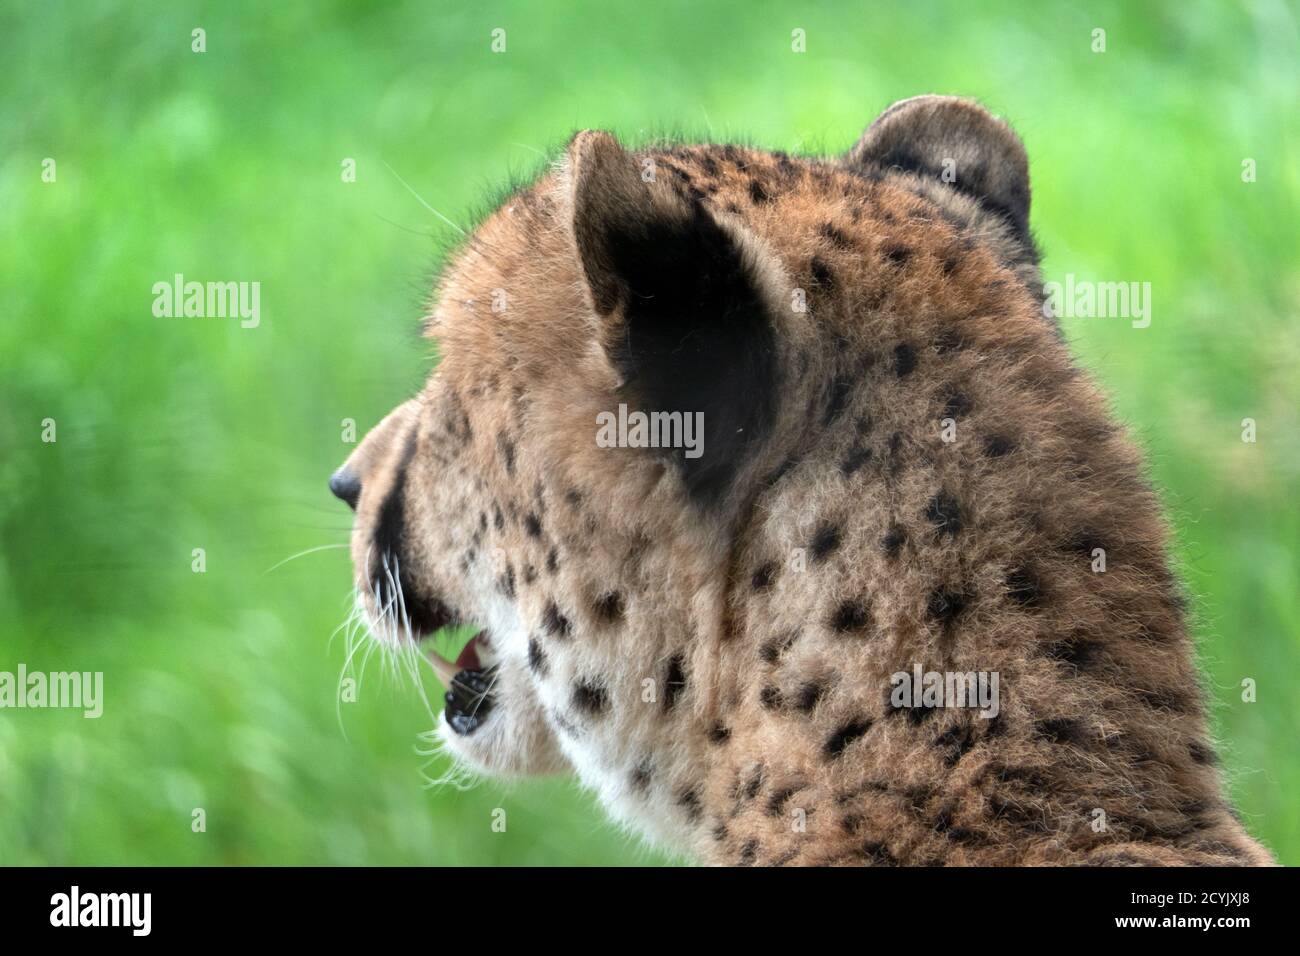 Adult cheetah (Acinonyx jubatus) looking away in zoological gardens cage. Wild animal, African wildlife, feline, wild cat in zoo enclosure Stock Photo